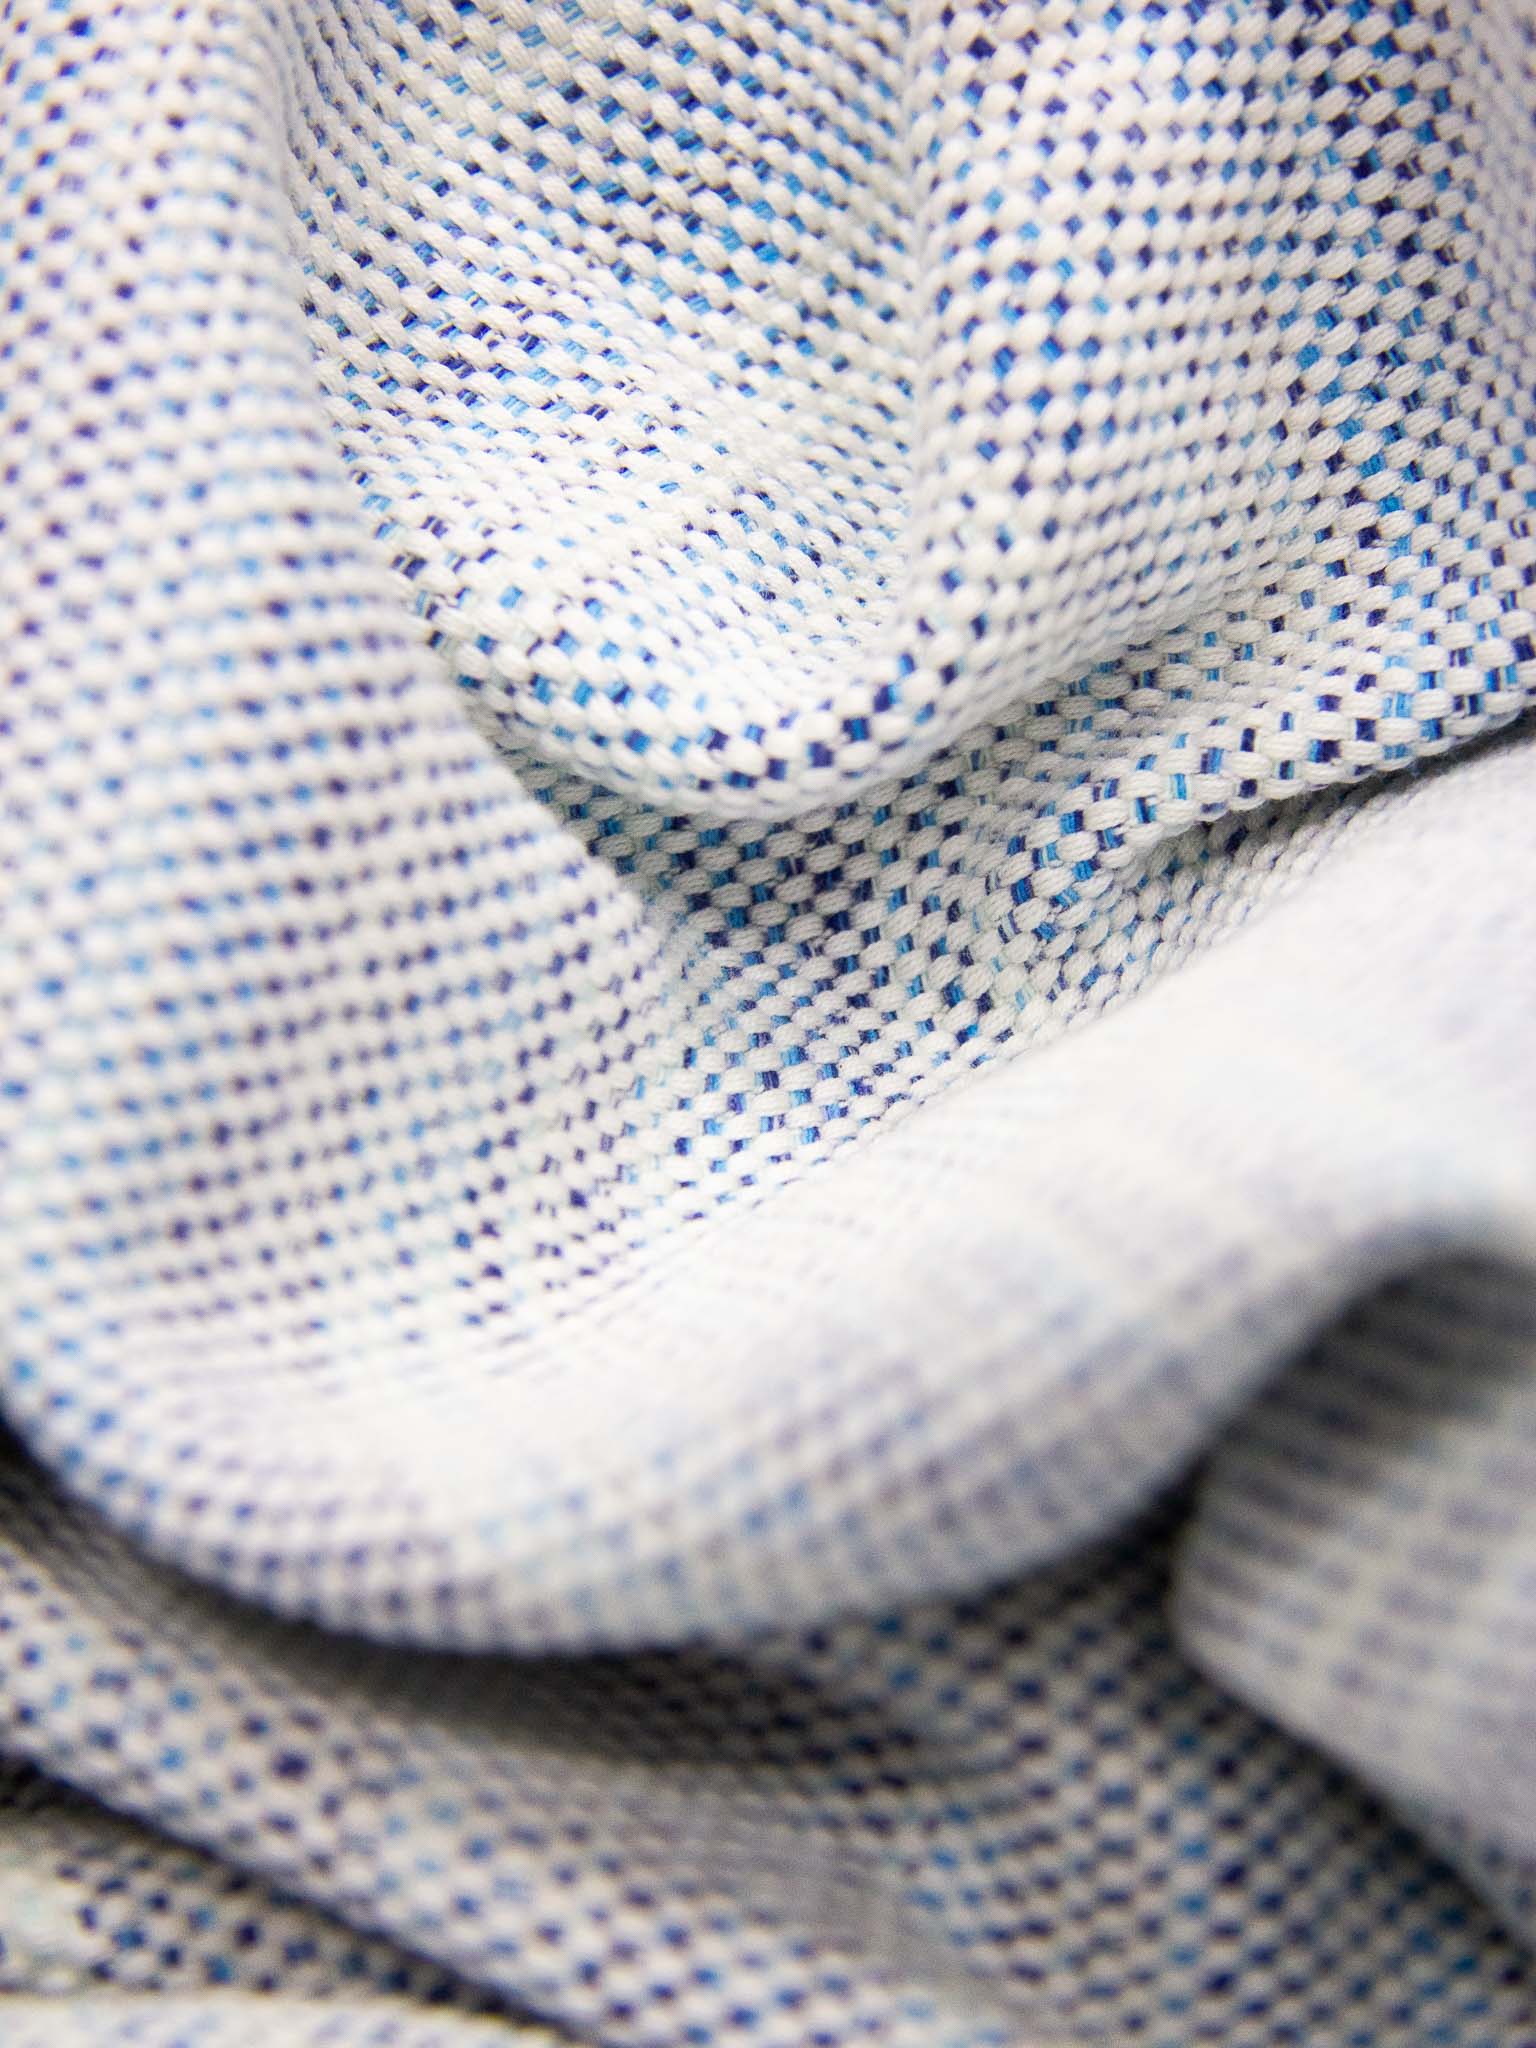 Blue patterned lightweight beach towel close up